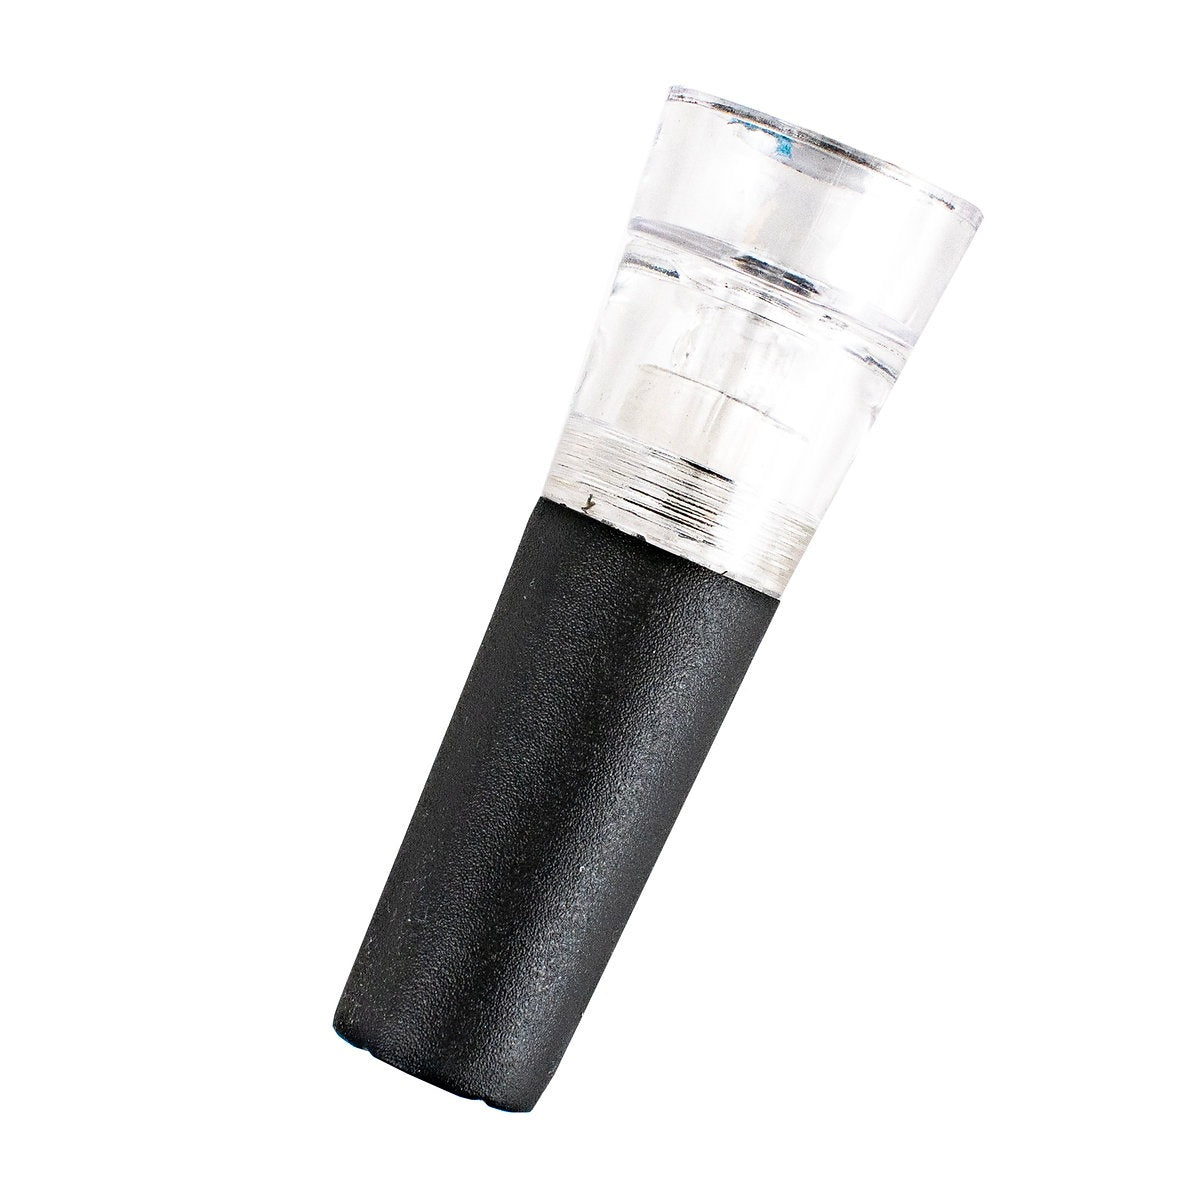 BarY3 BAR-0751 Vacuum Pump Wine Stopper, Black/Clear